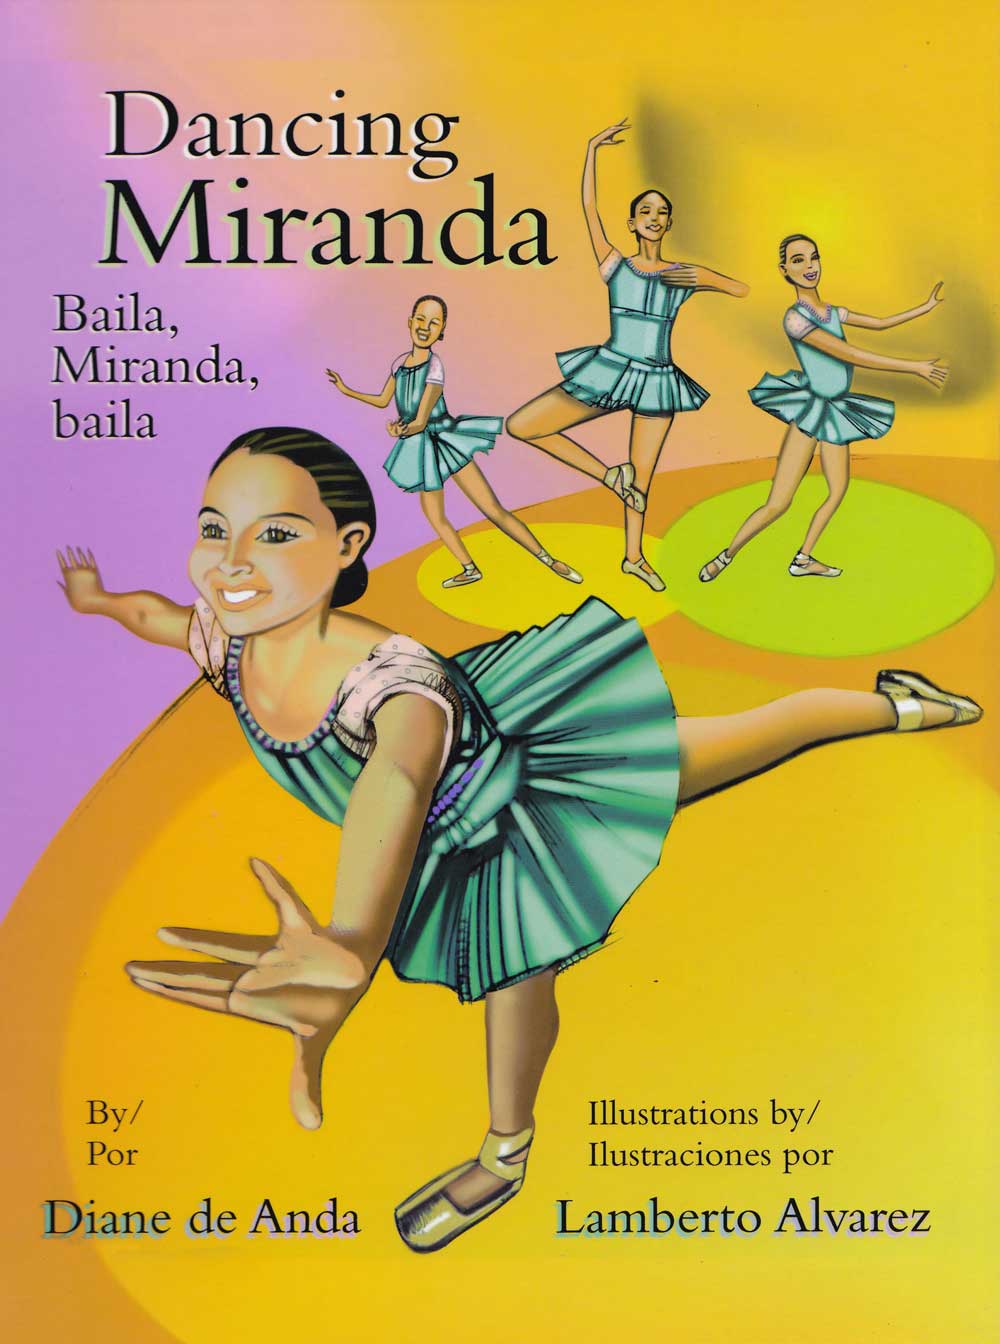 Baila, Miranda, baila - Dancing Miranda, Del Sol Books